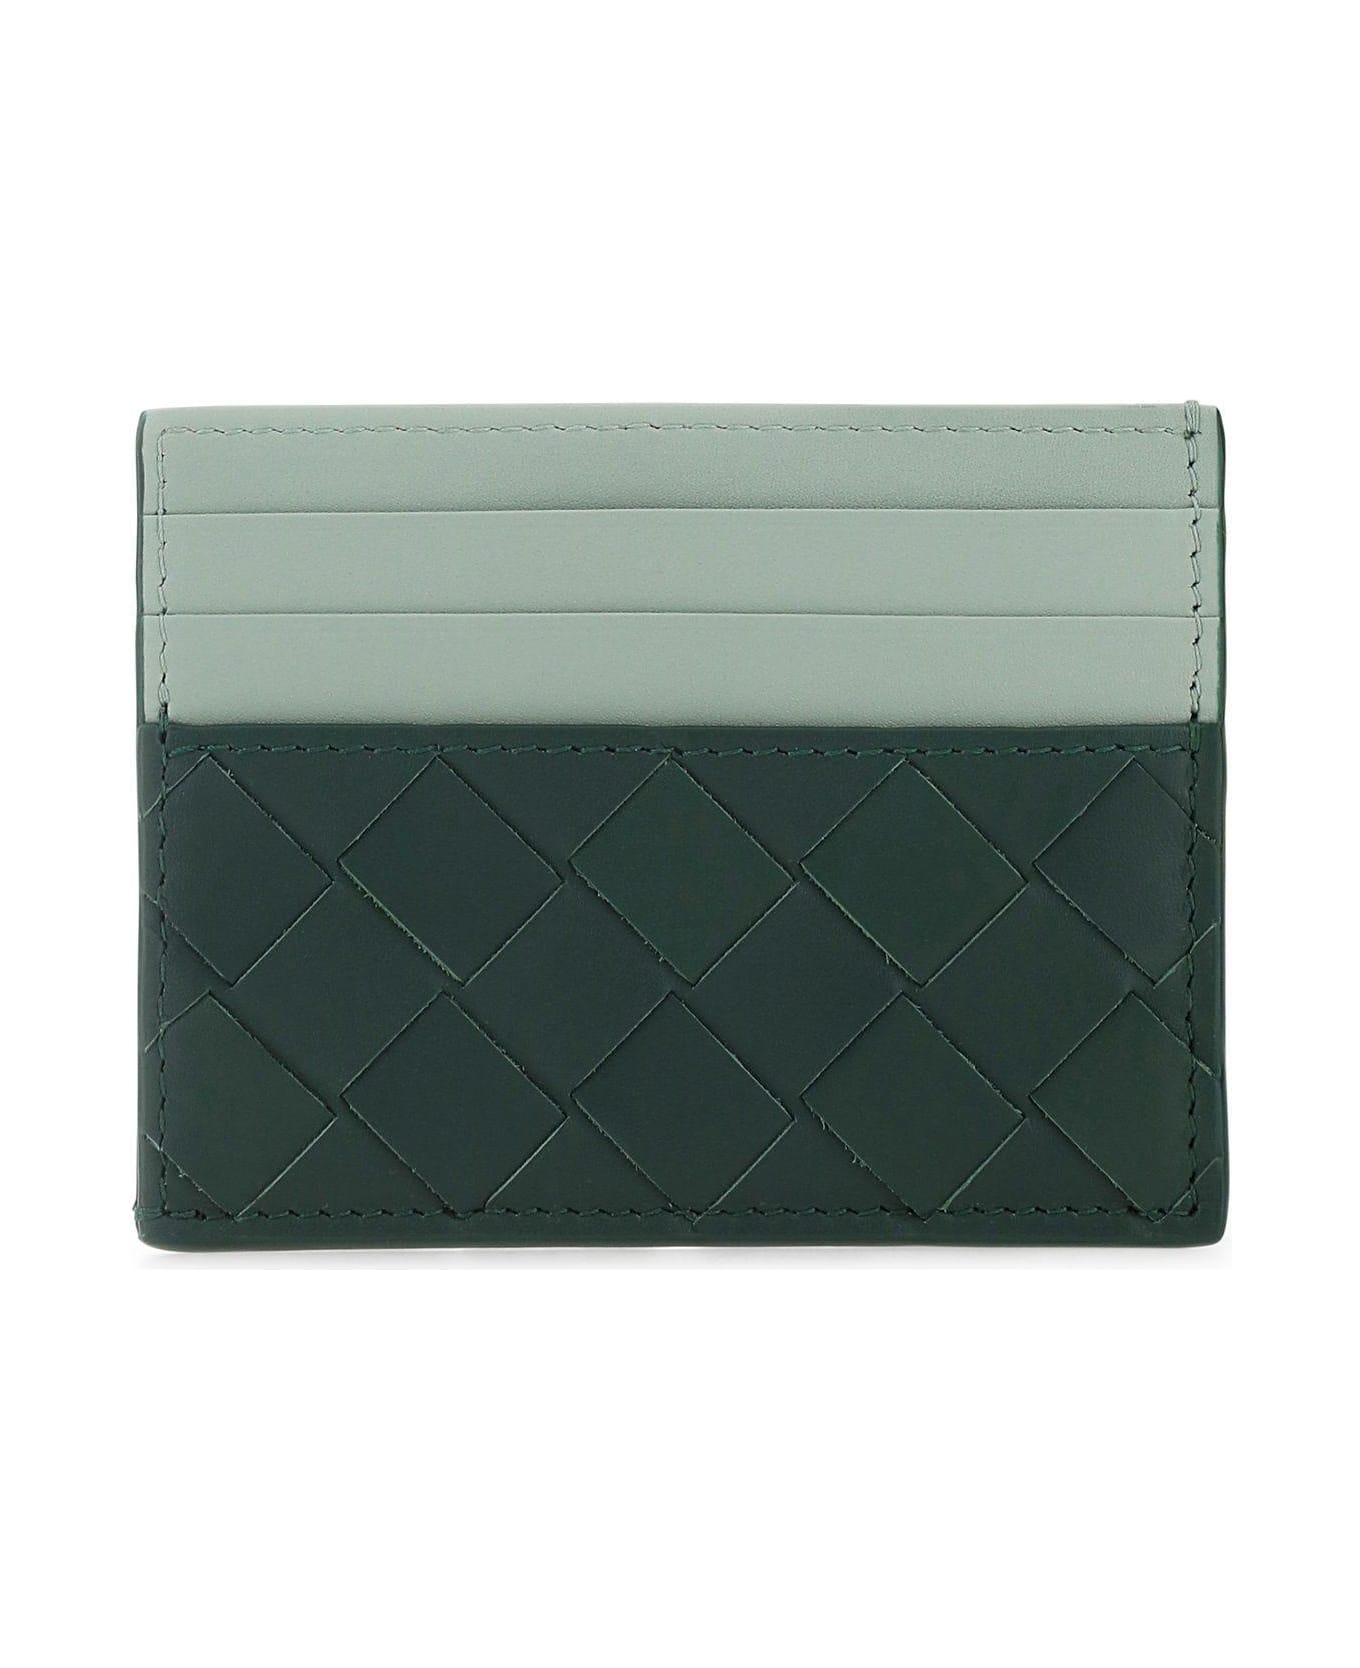 Bottega Veneta Two-tone Leather Card Holder - GREEN